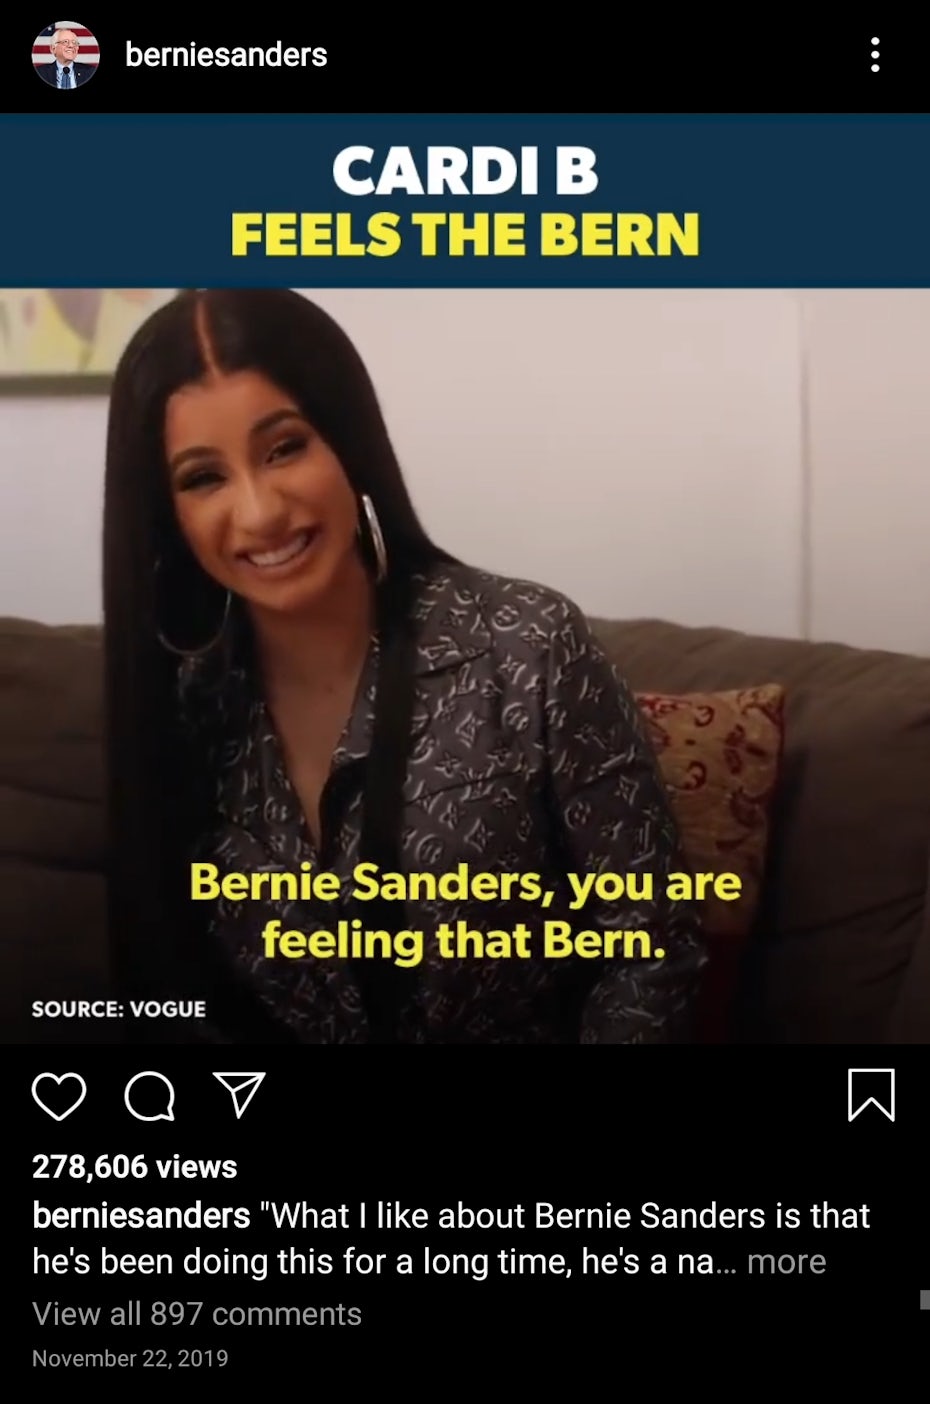 Bernie Sanders’s Instagram with Cardi B endorsement